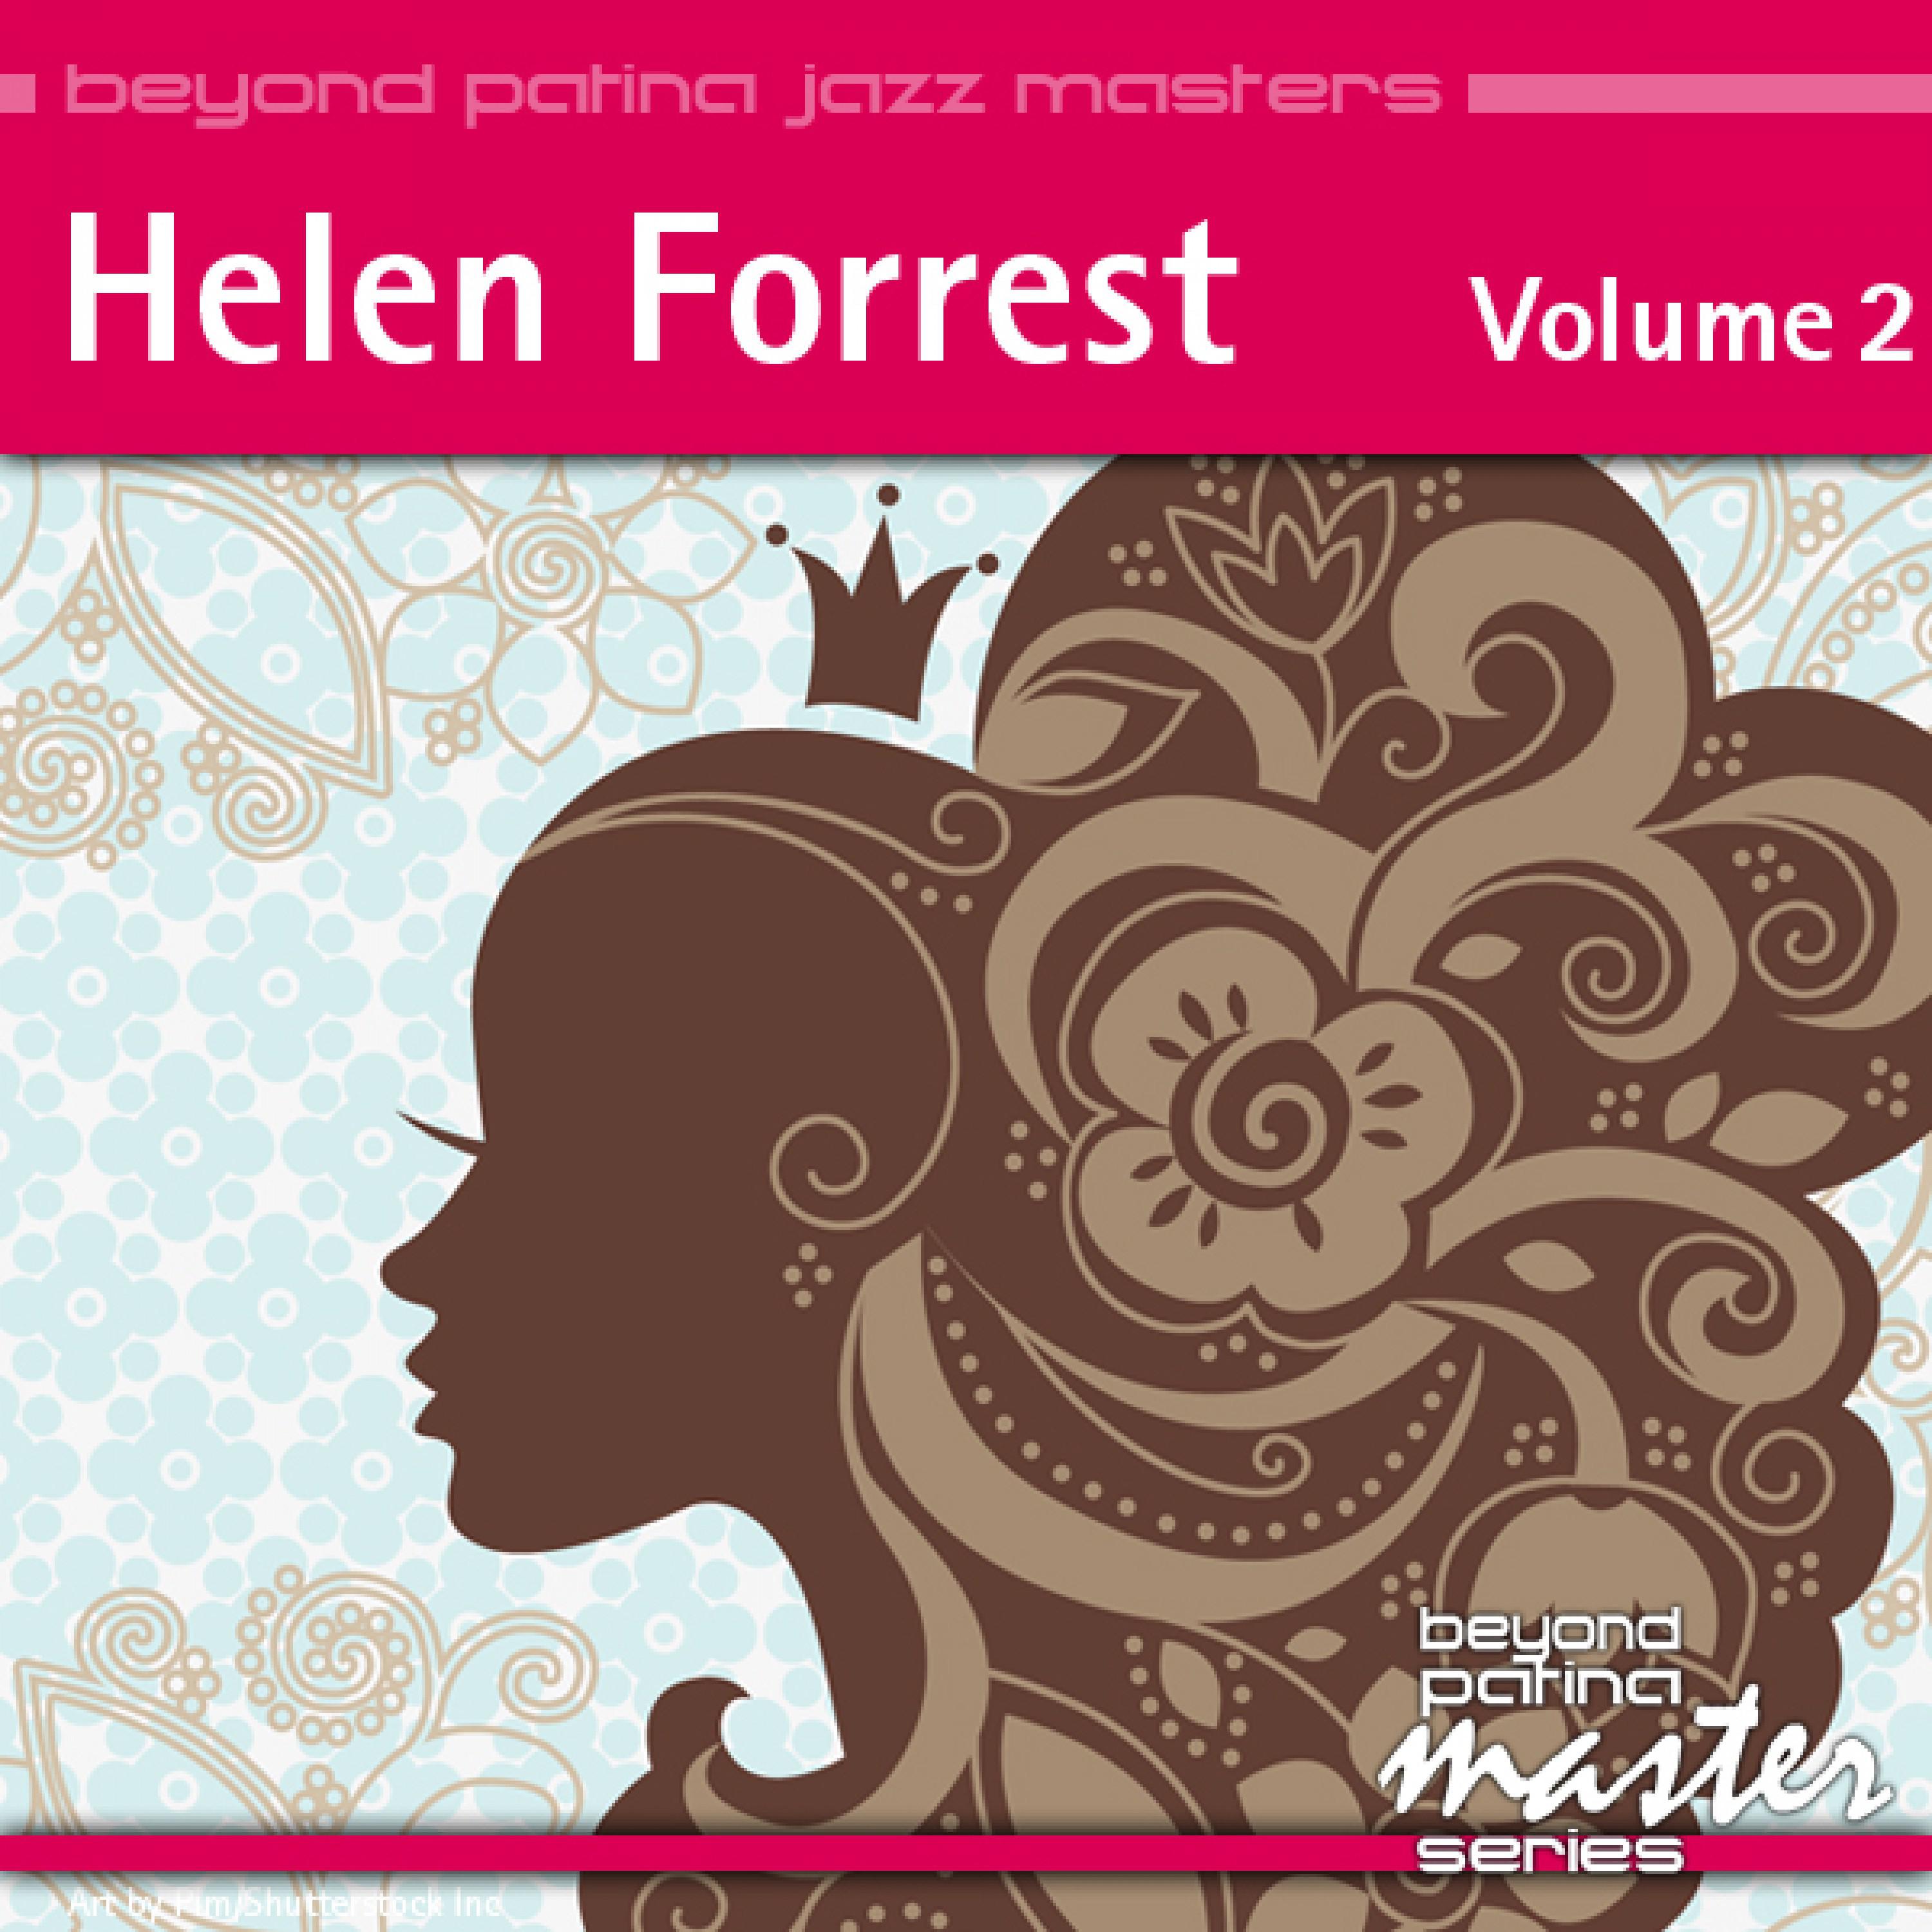 Beyond Patina Jazz Masters: Helen Forrest Vol. 2